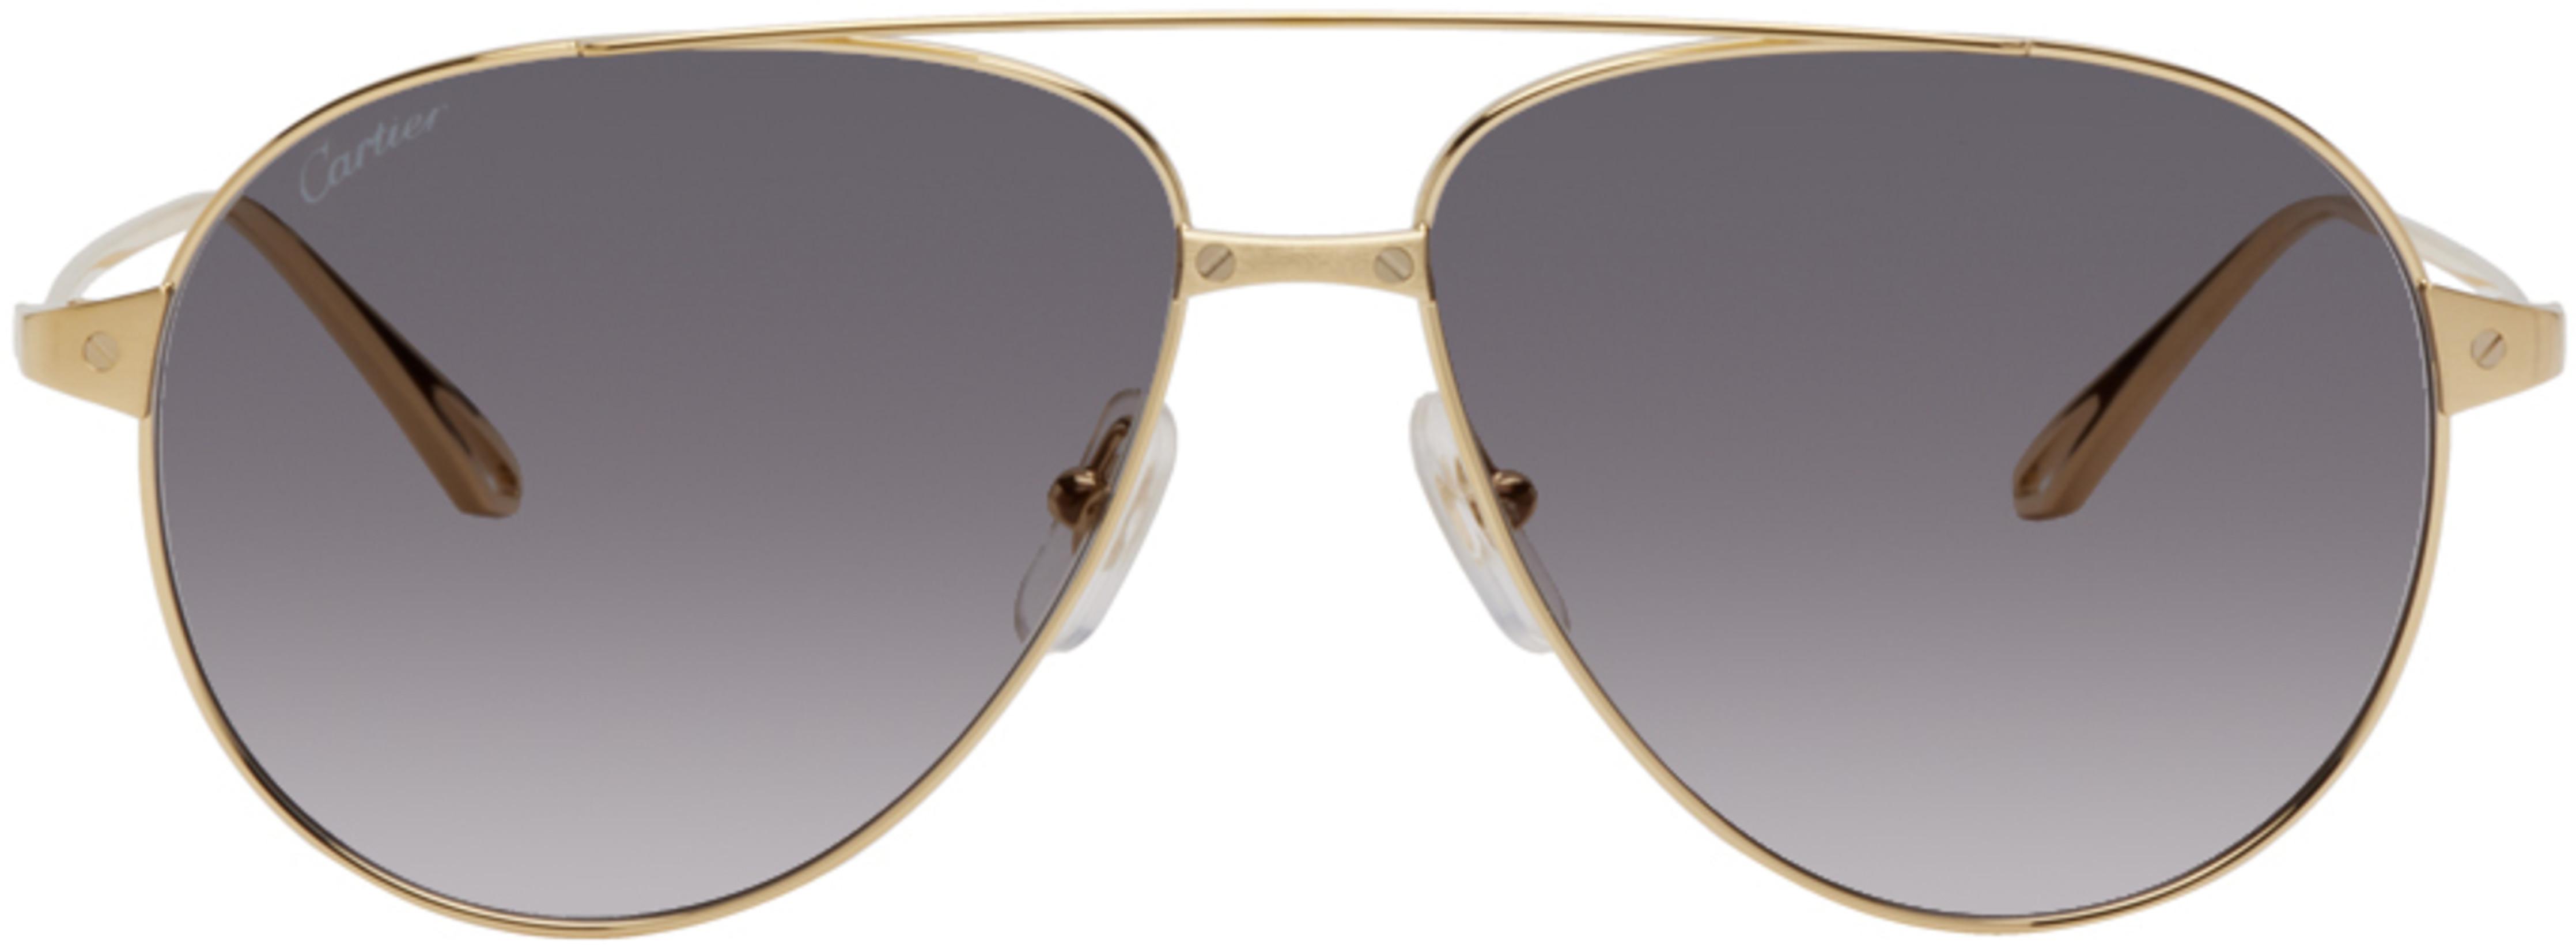 Gold Aviator Sunglasses by CARTIER